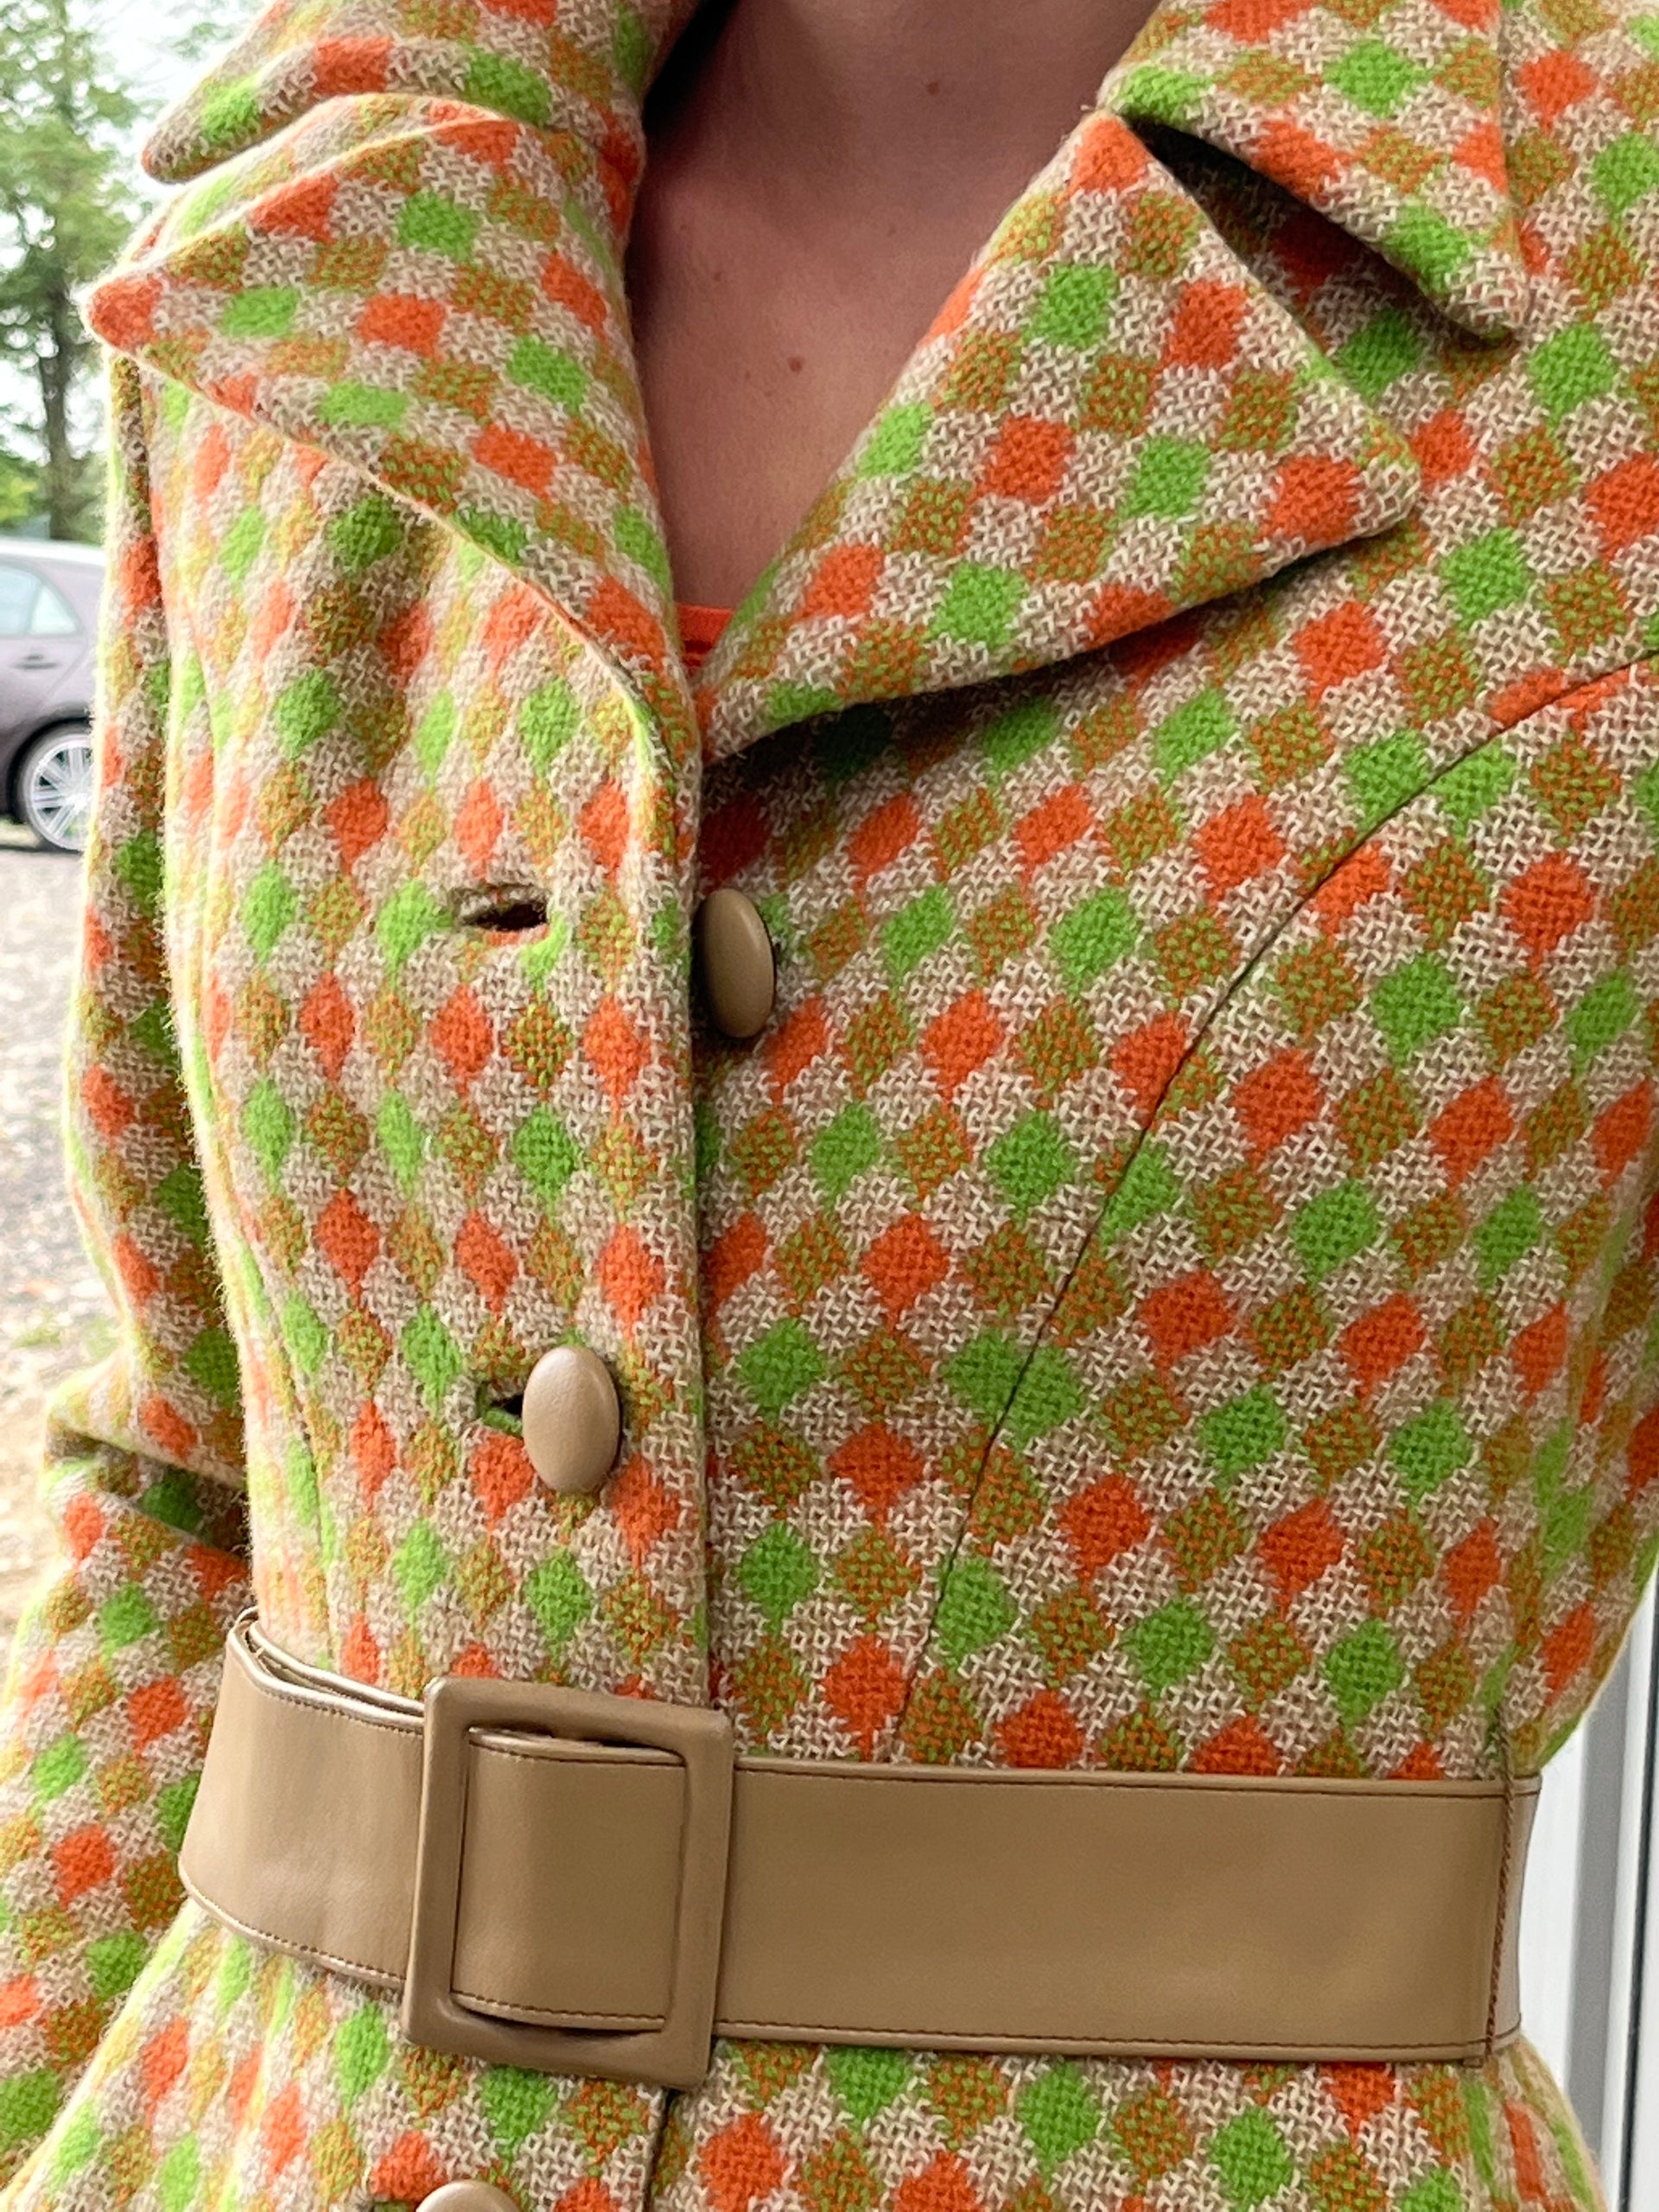 1960s Designer Mod Coat in Harlequin Pattern//Size S